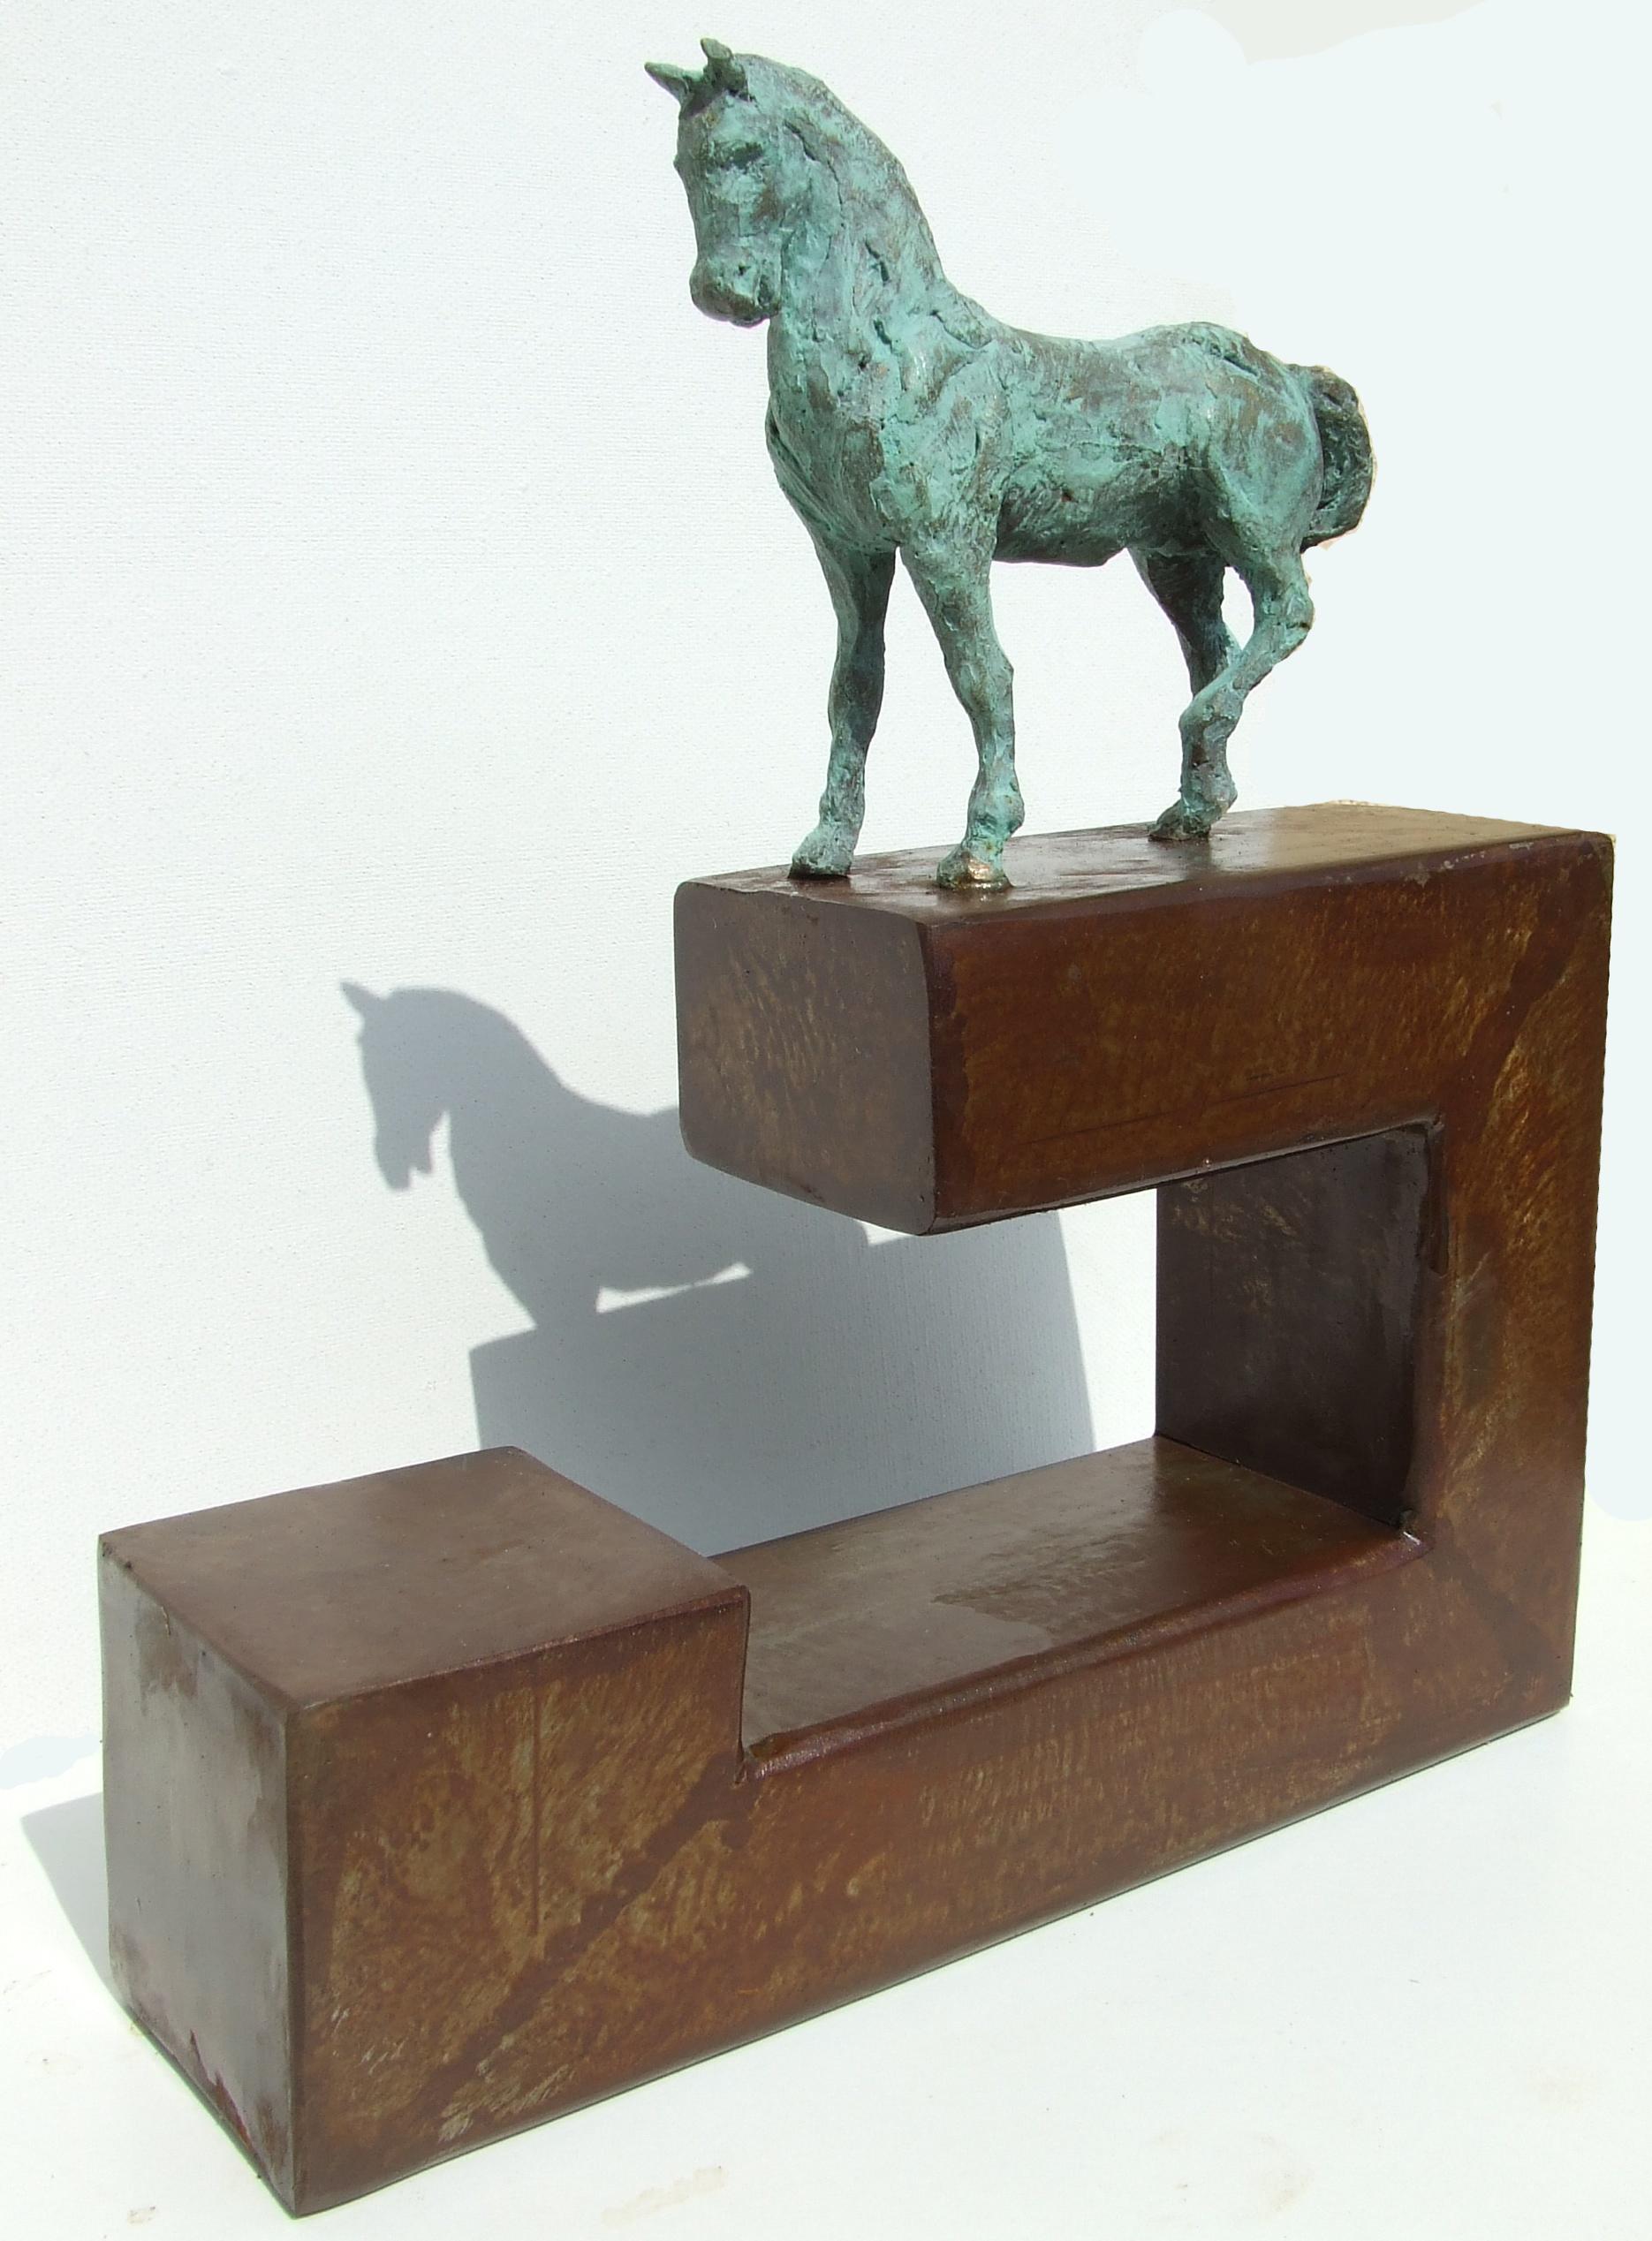 Joan Artigas Planas Figurative Sculpture - "Leonardo's Horse" contemporary bronze table, mural sculpture horse animal 